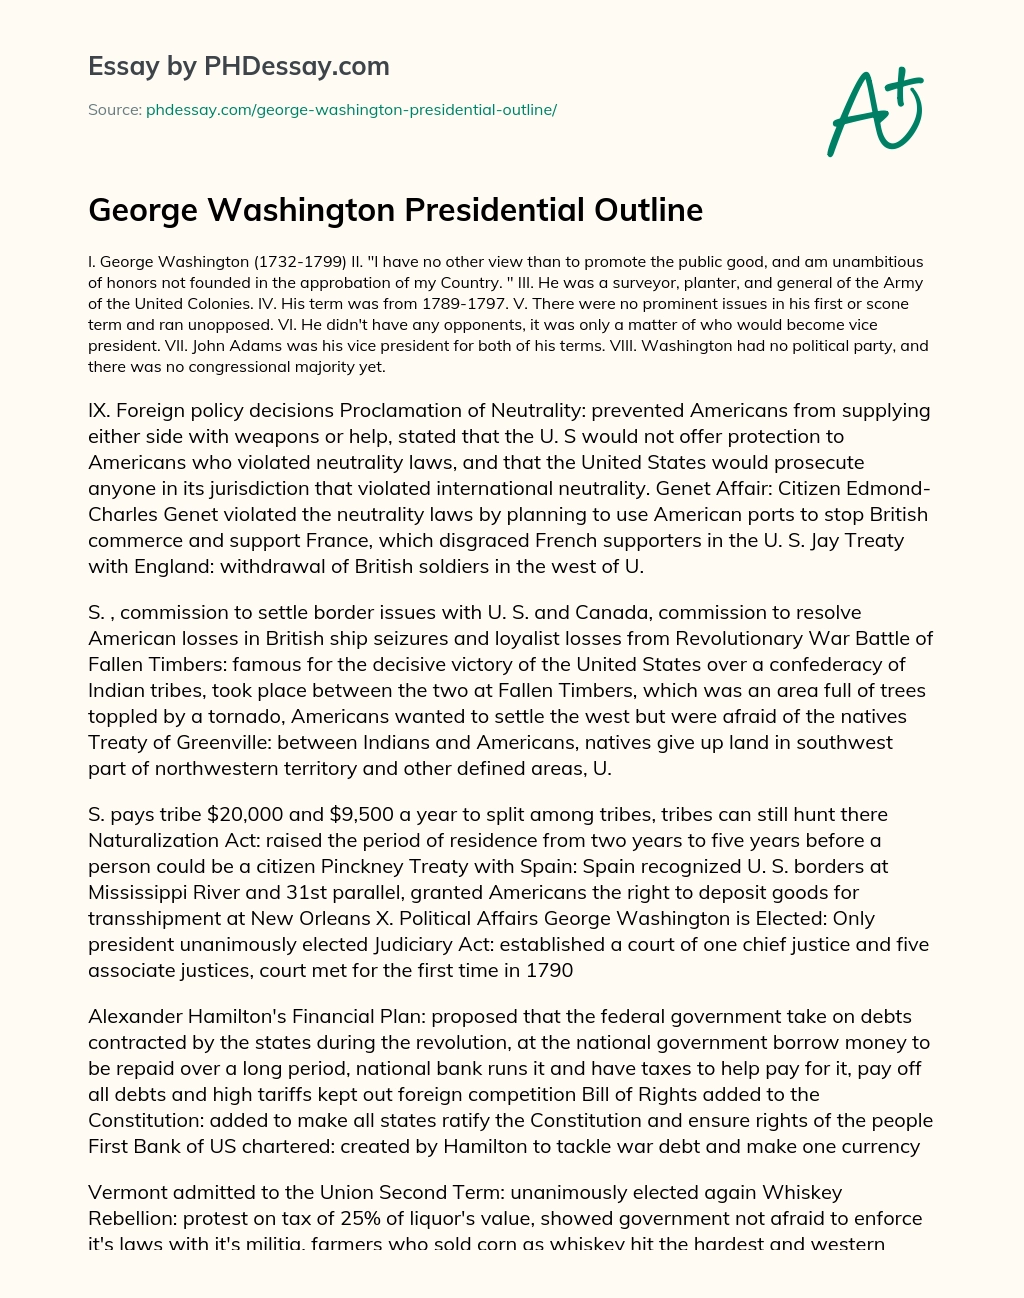 George Washington Presidential Outline essay